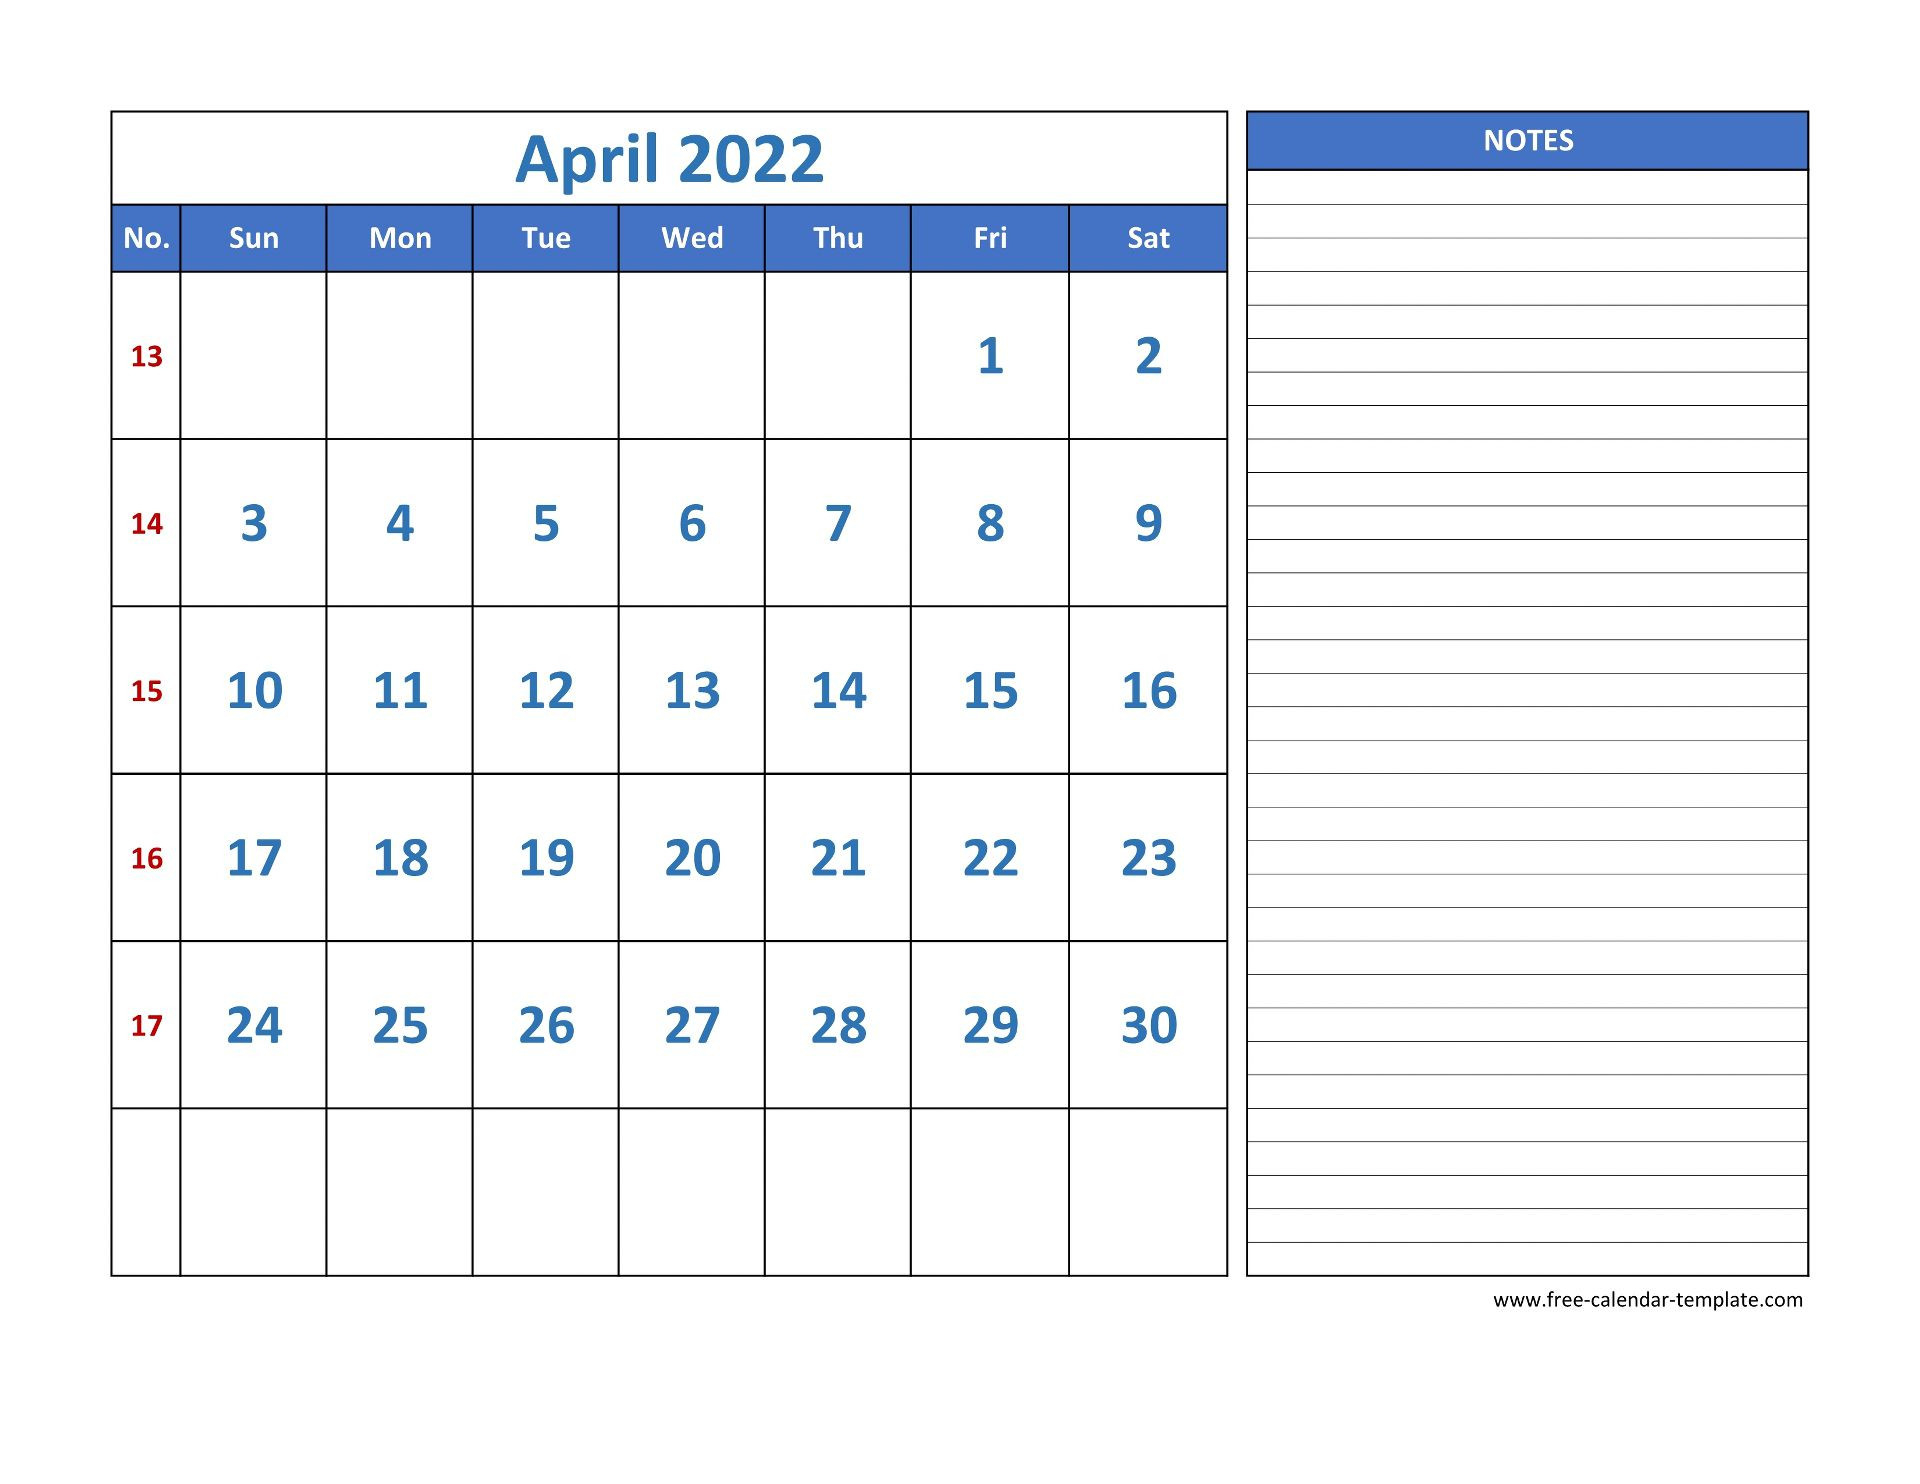 April Calendar 2022 Grid Lines For Holidays And Notes  Free Printable Calendar 2022 April